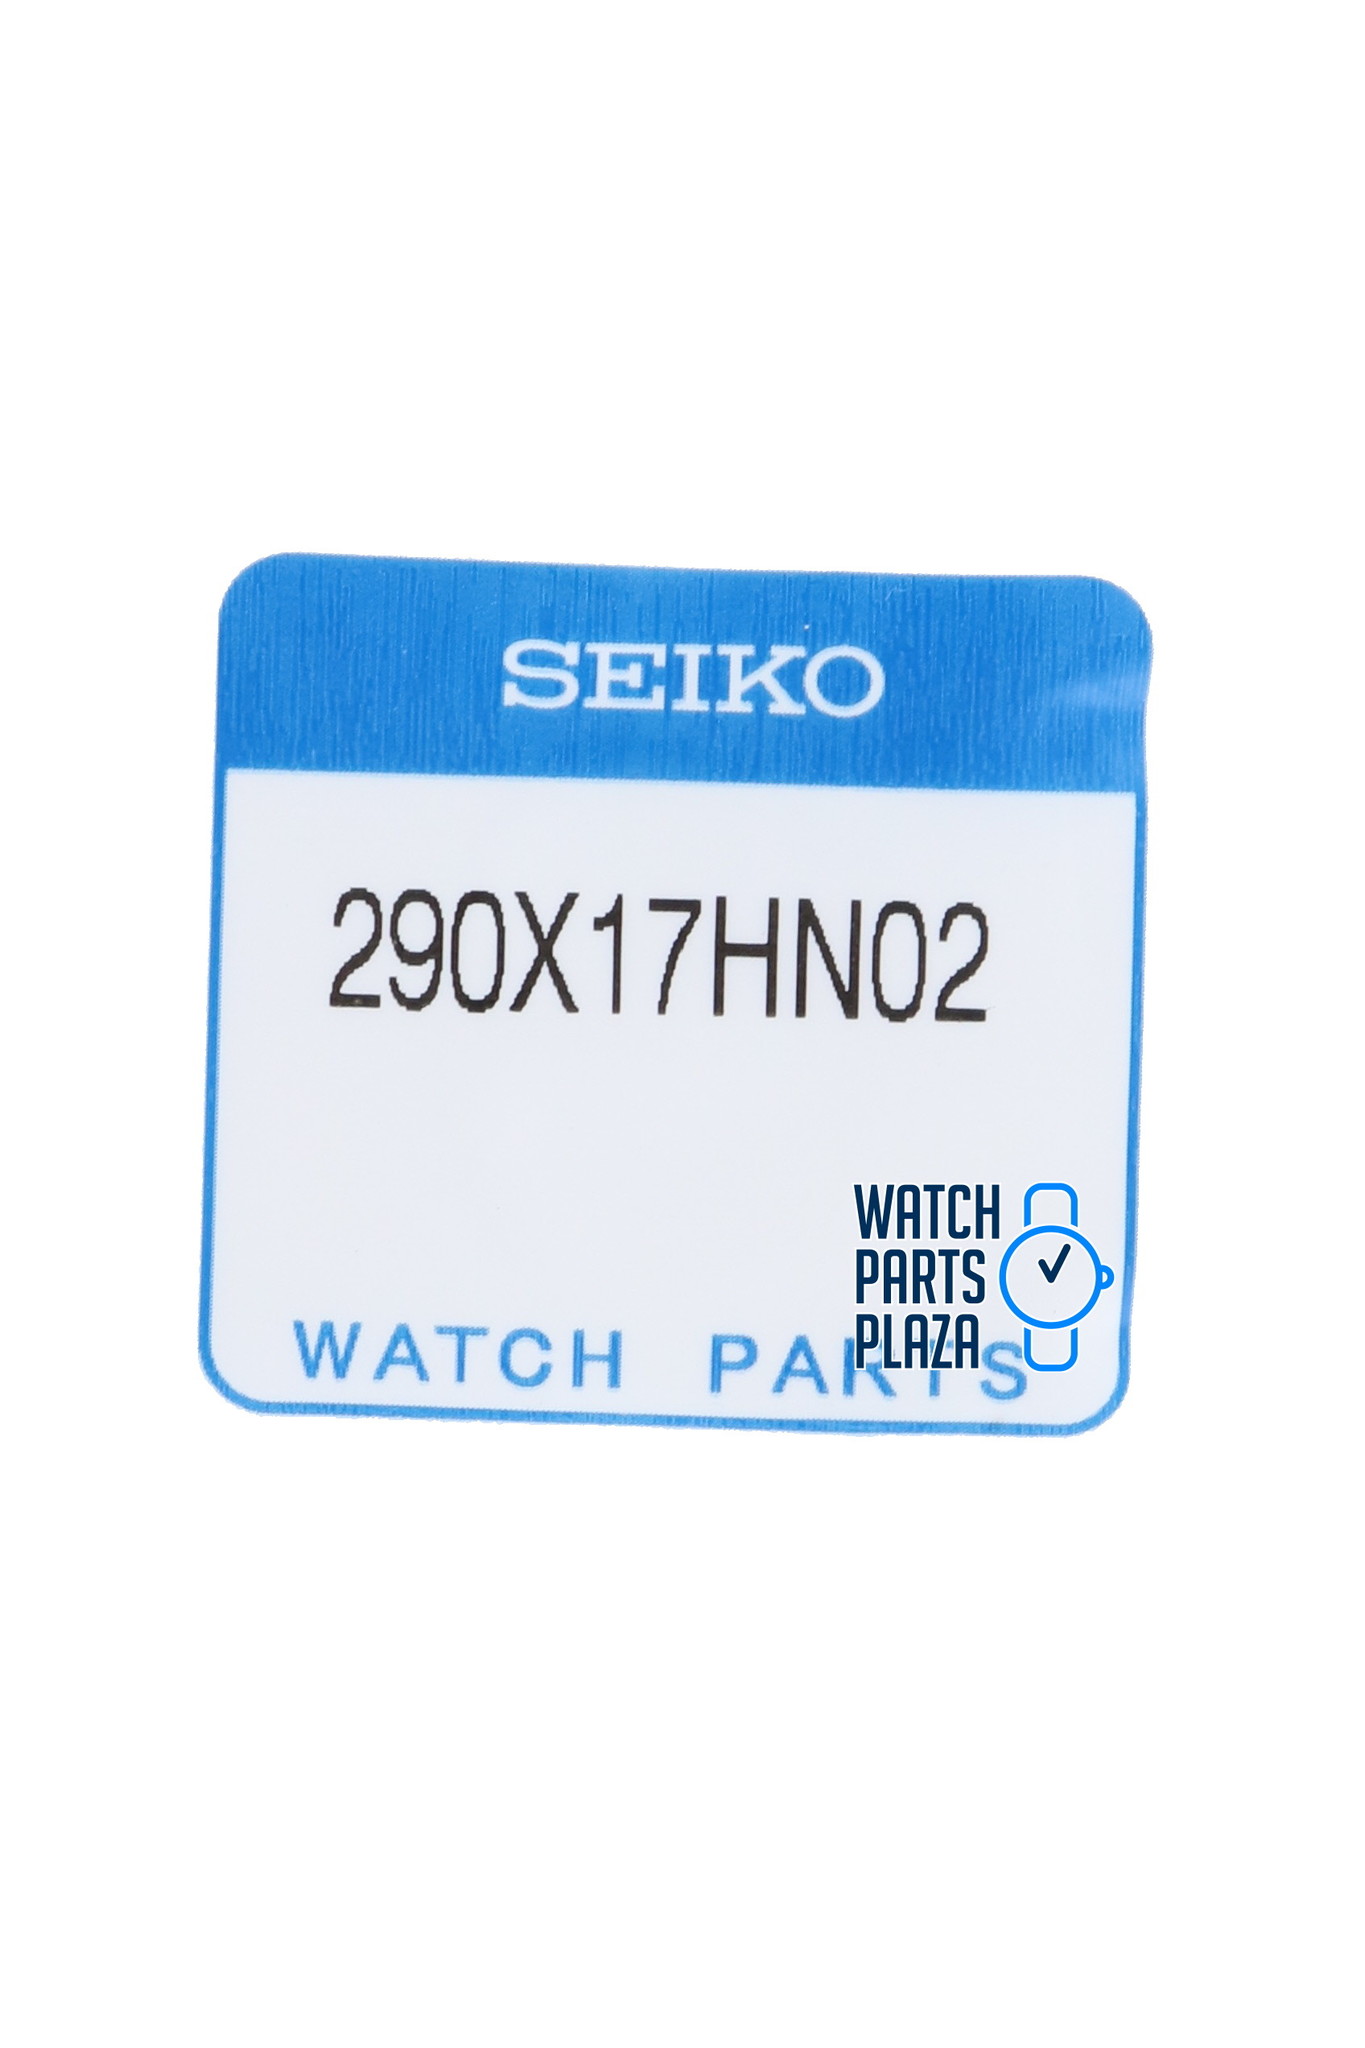 Seiko 290X17HN02 Crystal Glass 8F56-0020 / 0029 / 0080 - WatchPlaza